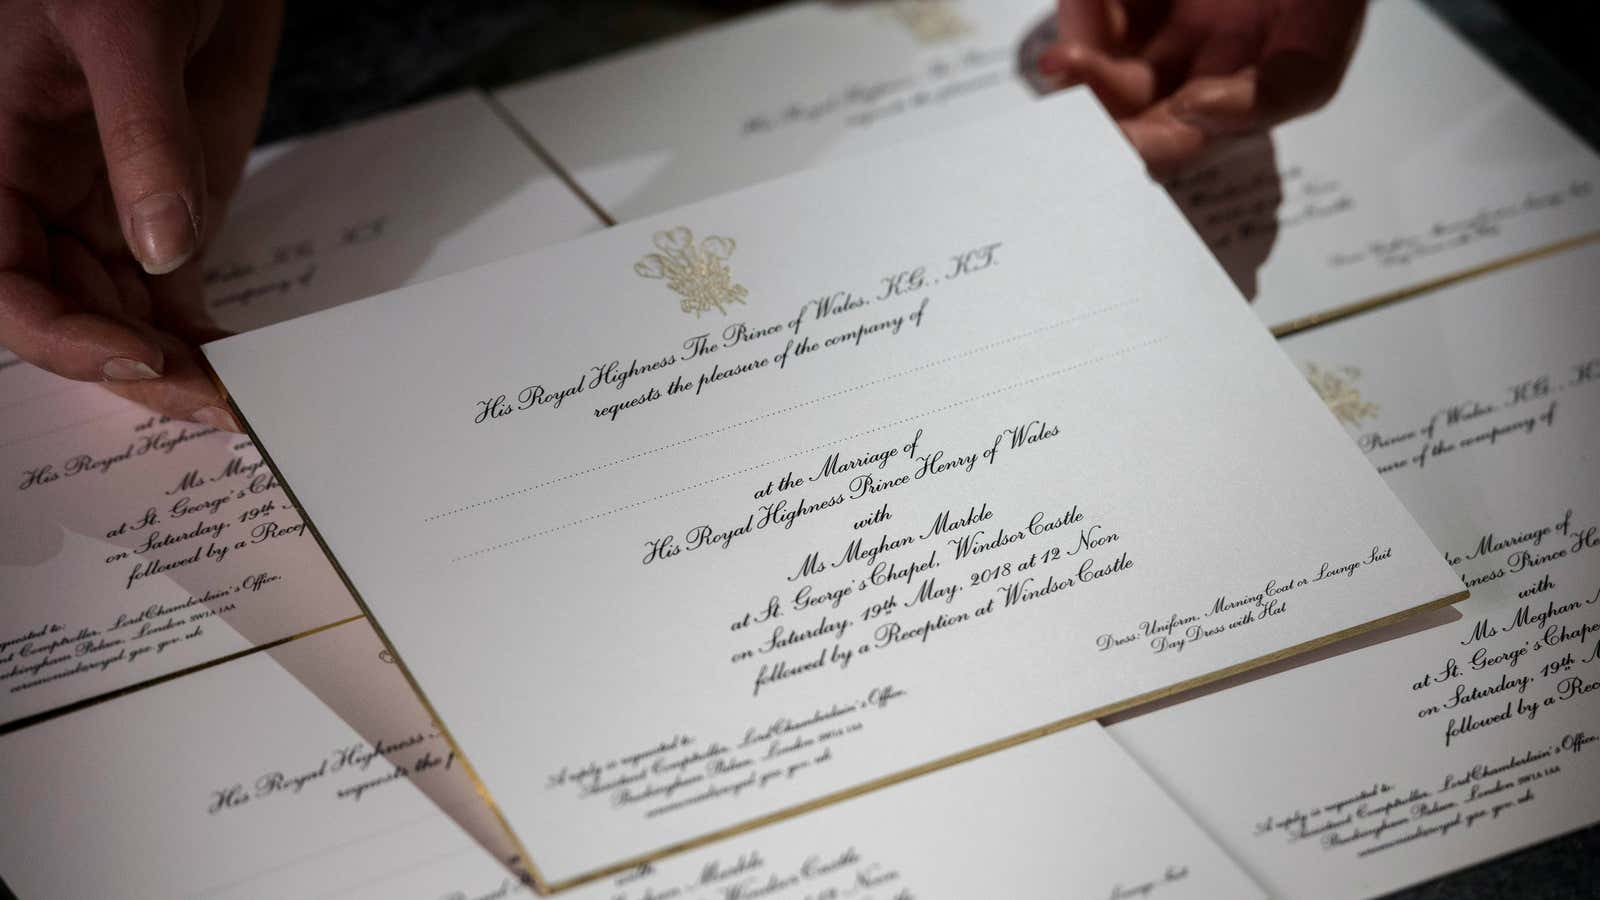 Meghan Markle and Prince Harry’s wedding invitation.